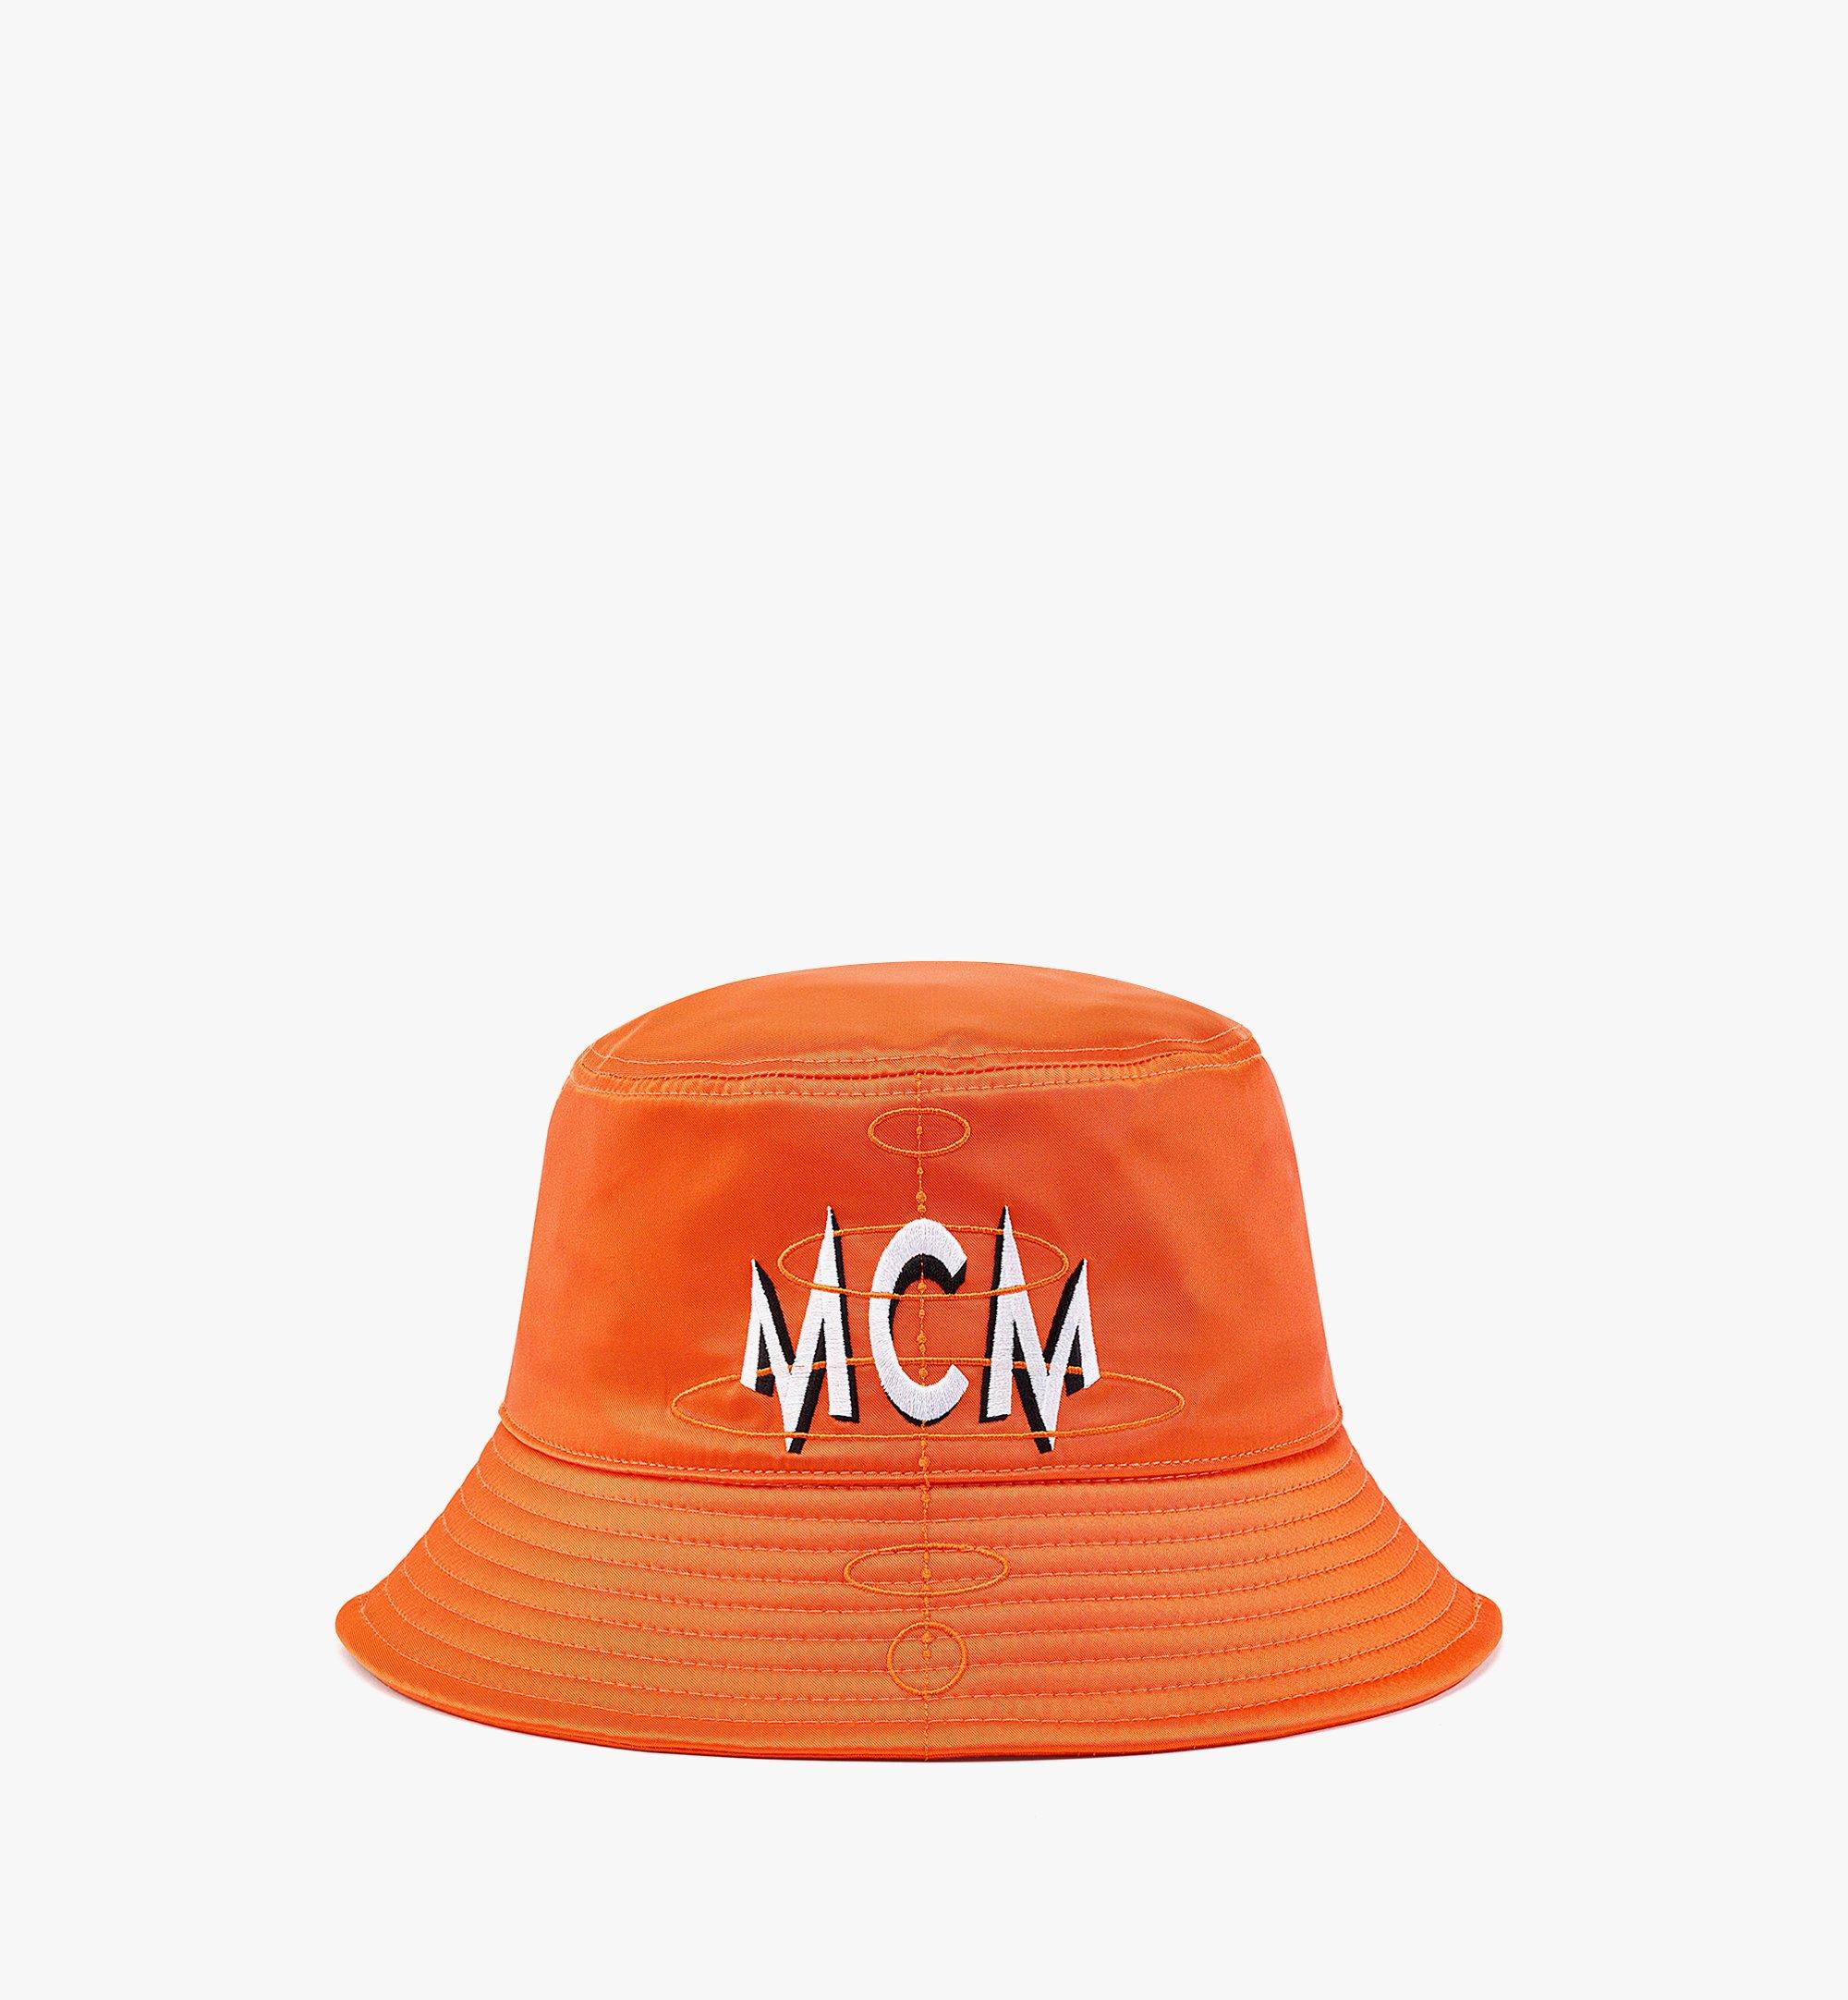 New MCM Women's Jacquard Veritas Visetos Fedora Bucket Hat